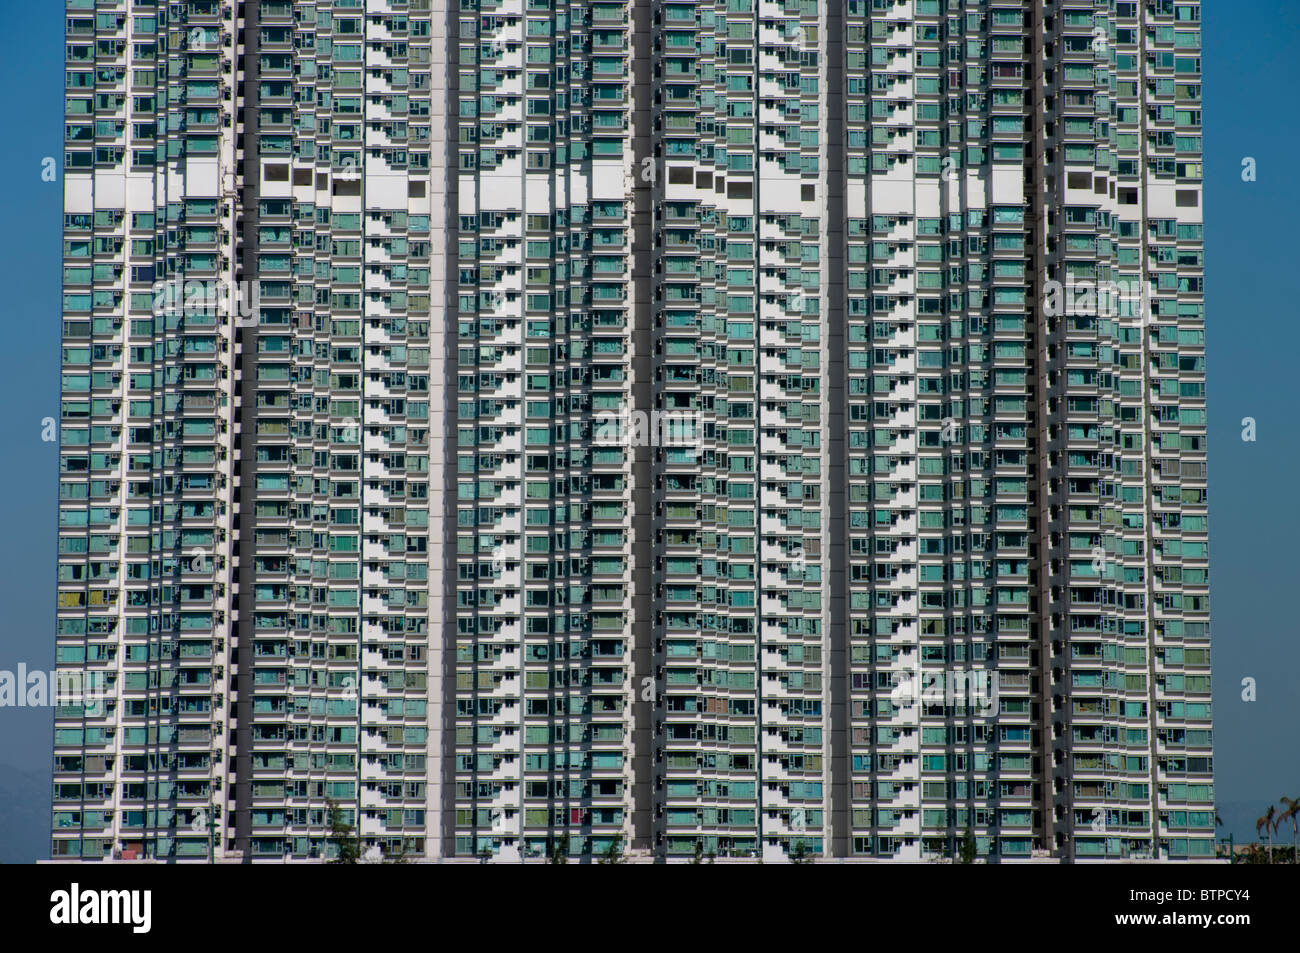 Asia, China, Hong Kong, Housing Tower Blocks Architecture Stock Photo